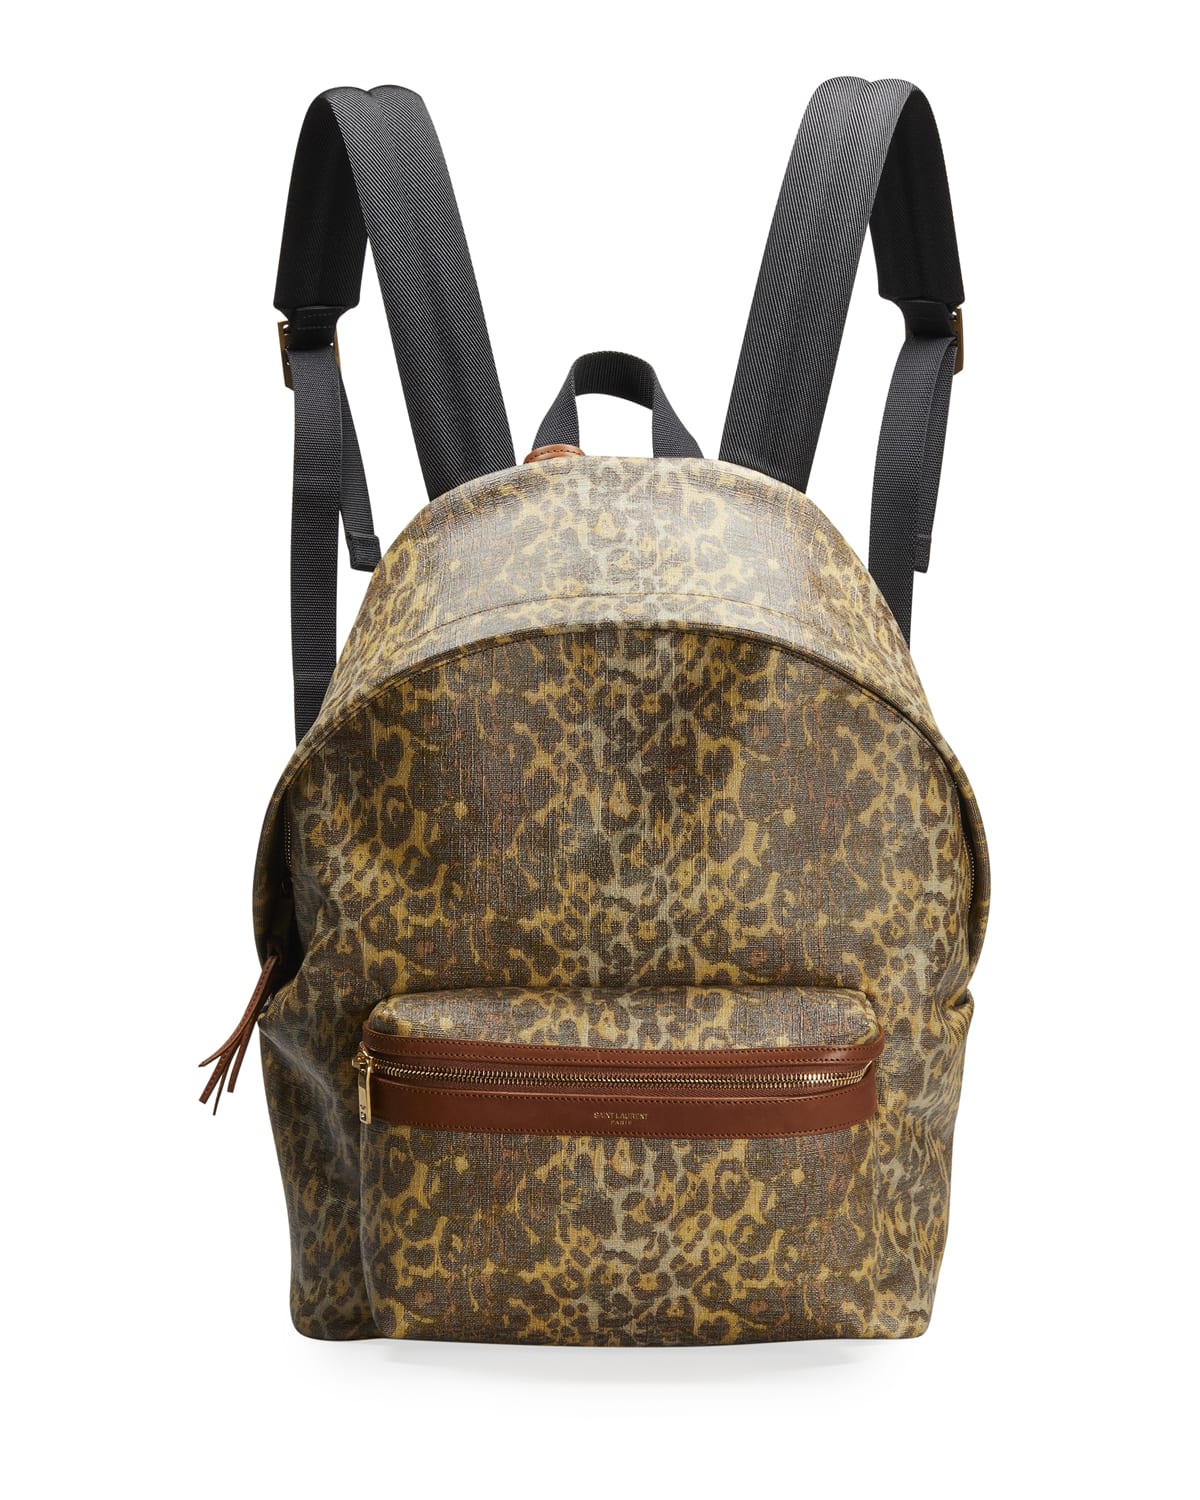 Leopard Print Bag | Neiman Marcus